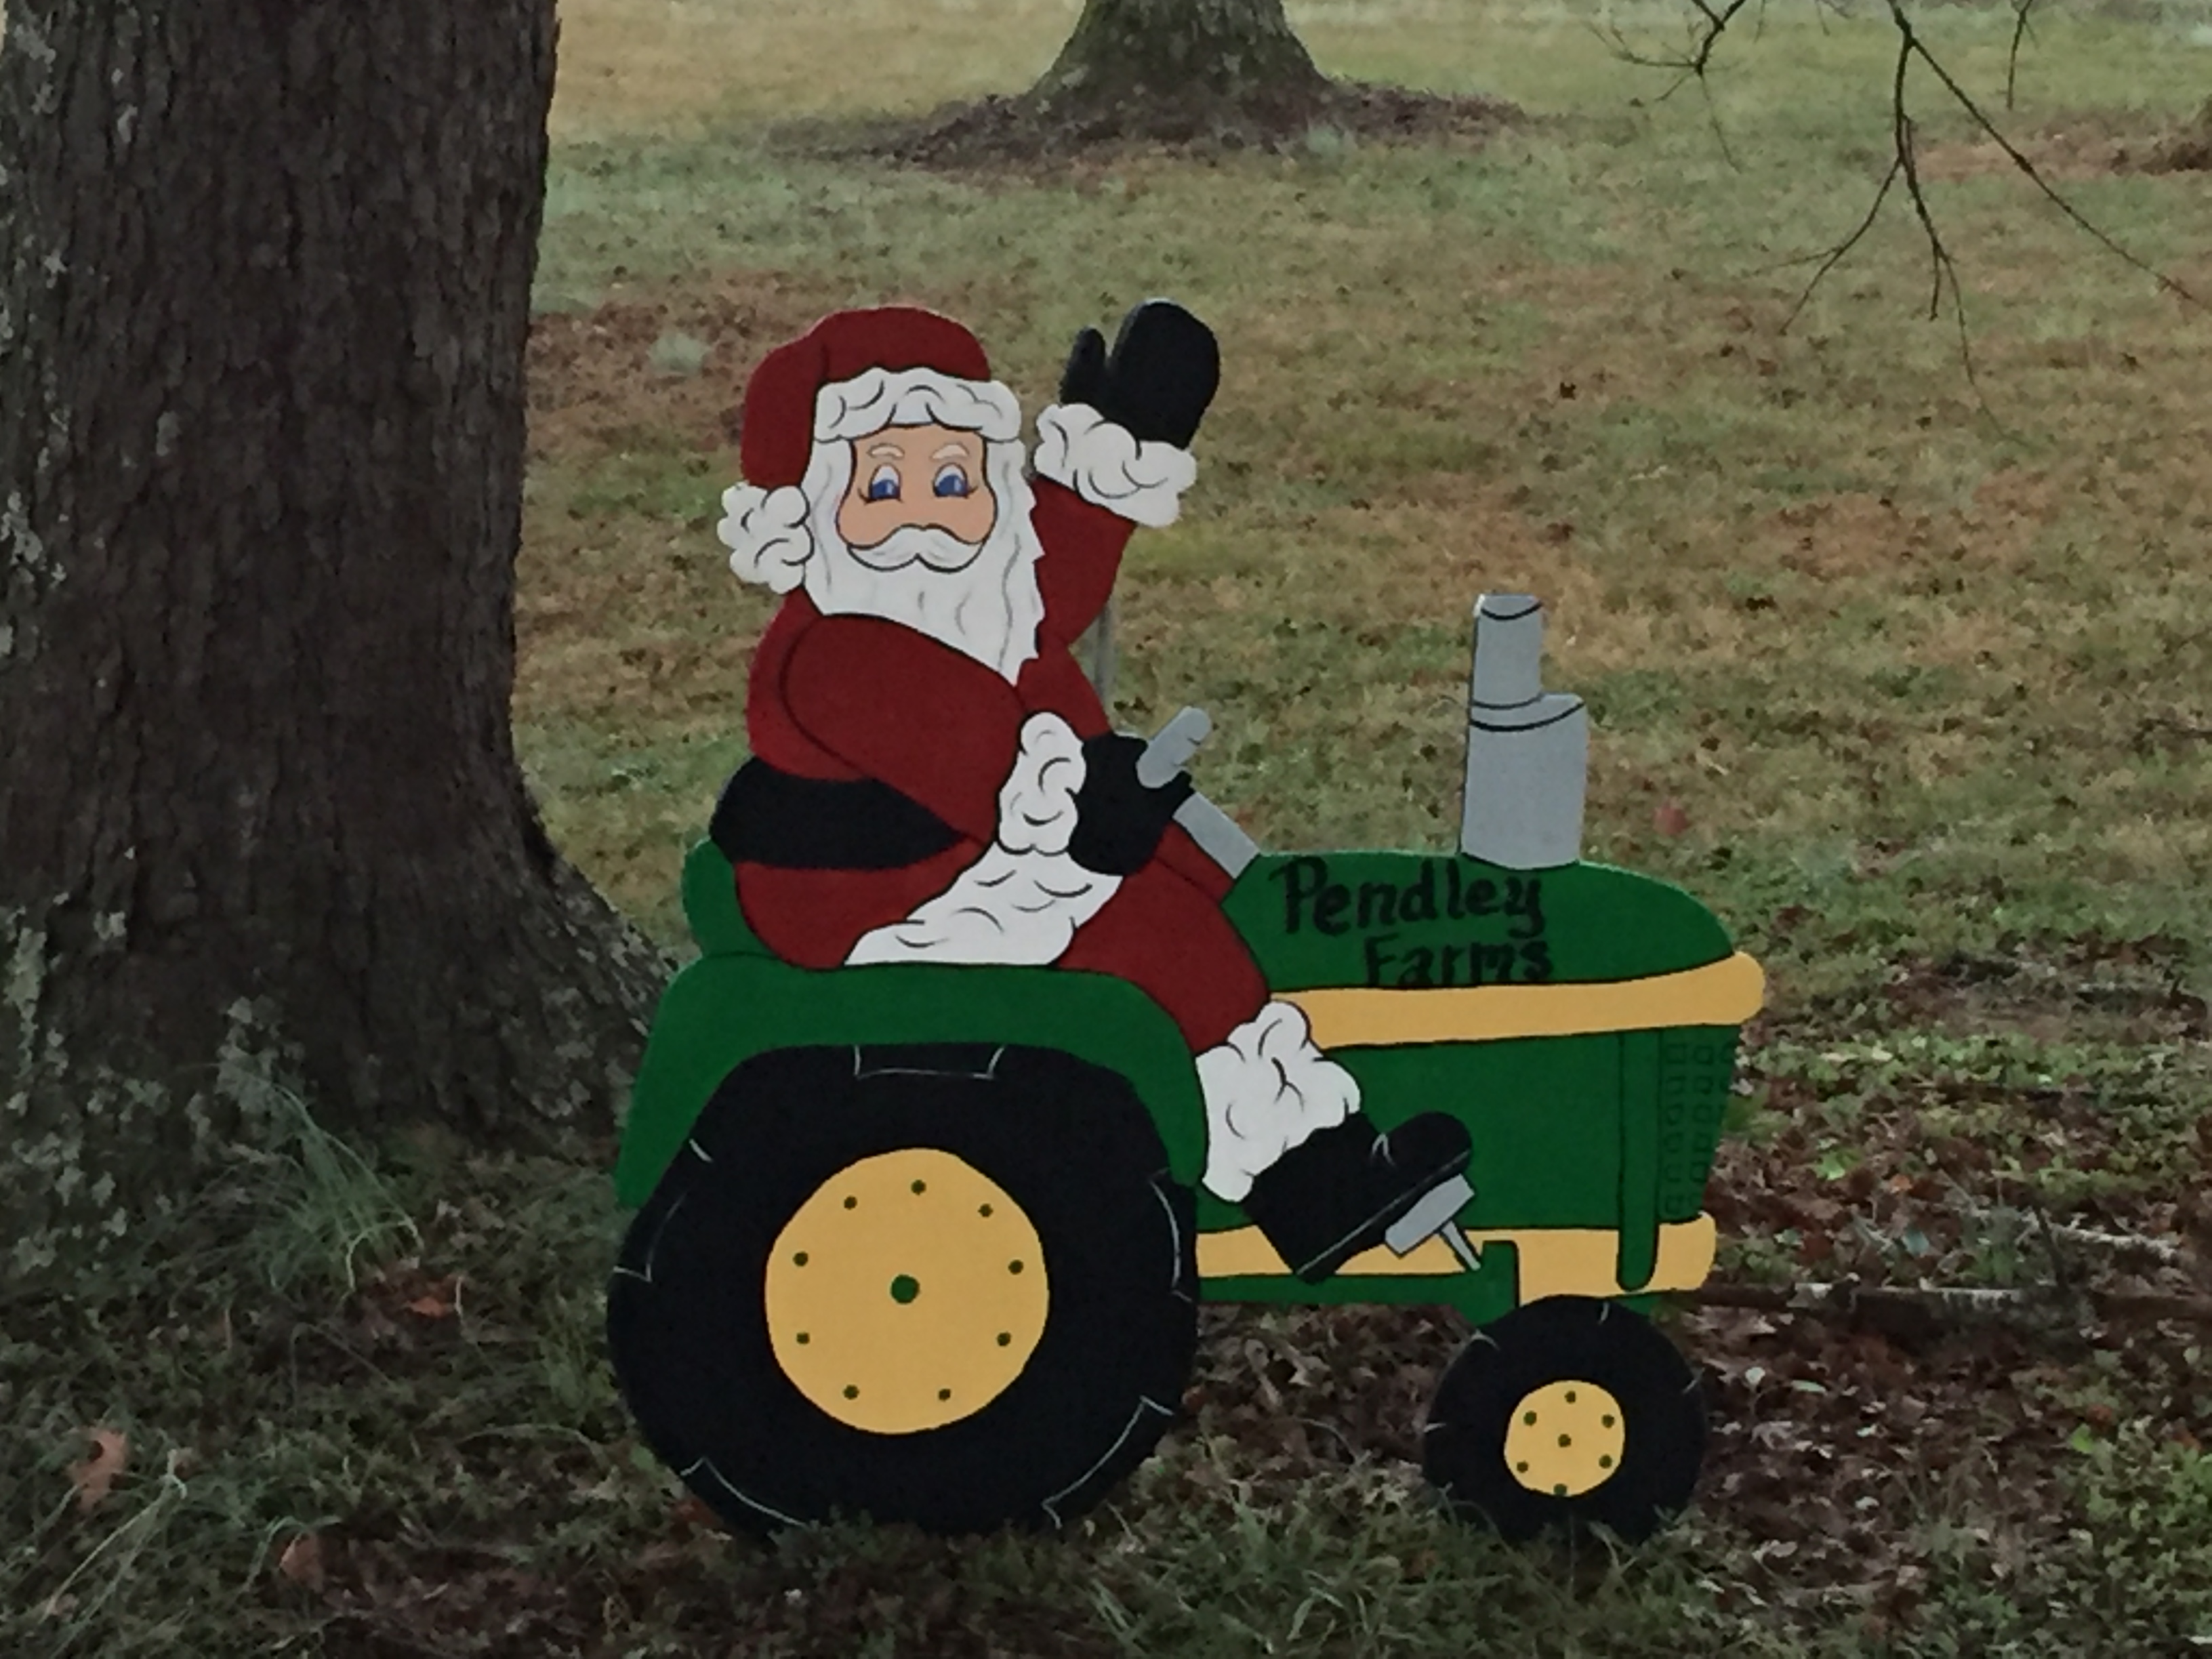 Santa is a Farmer too